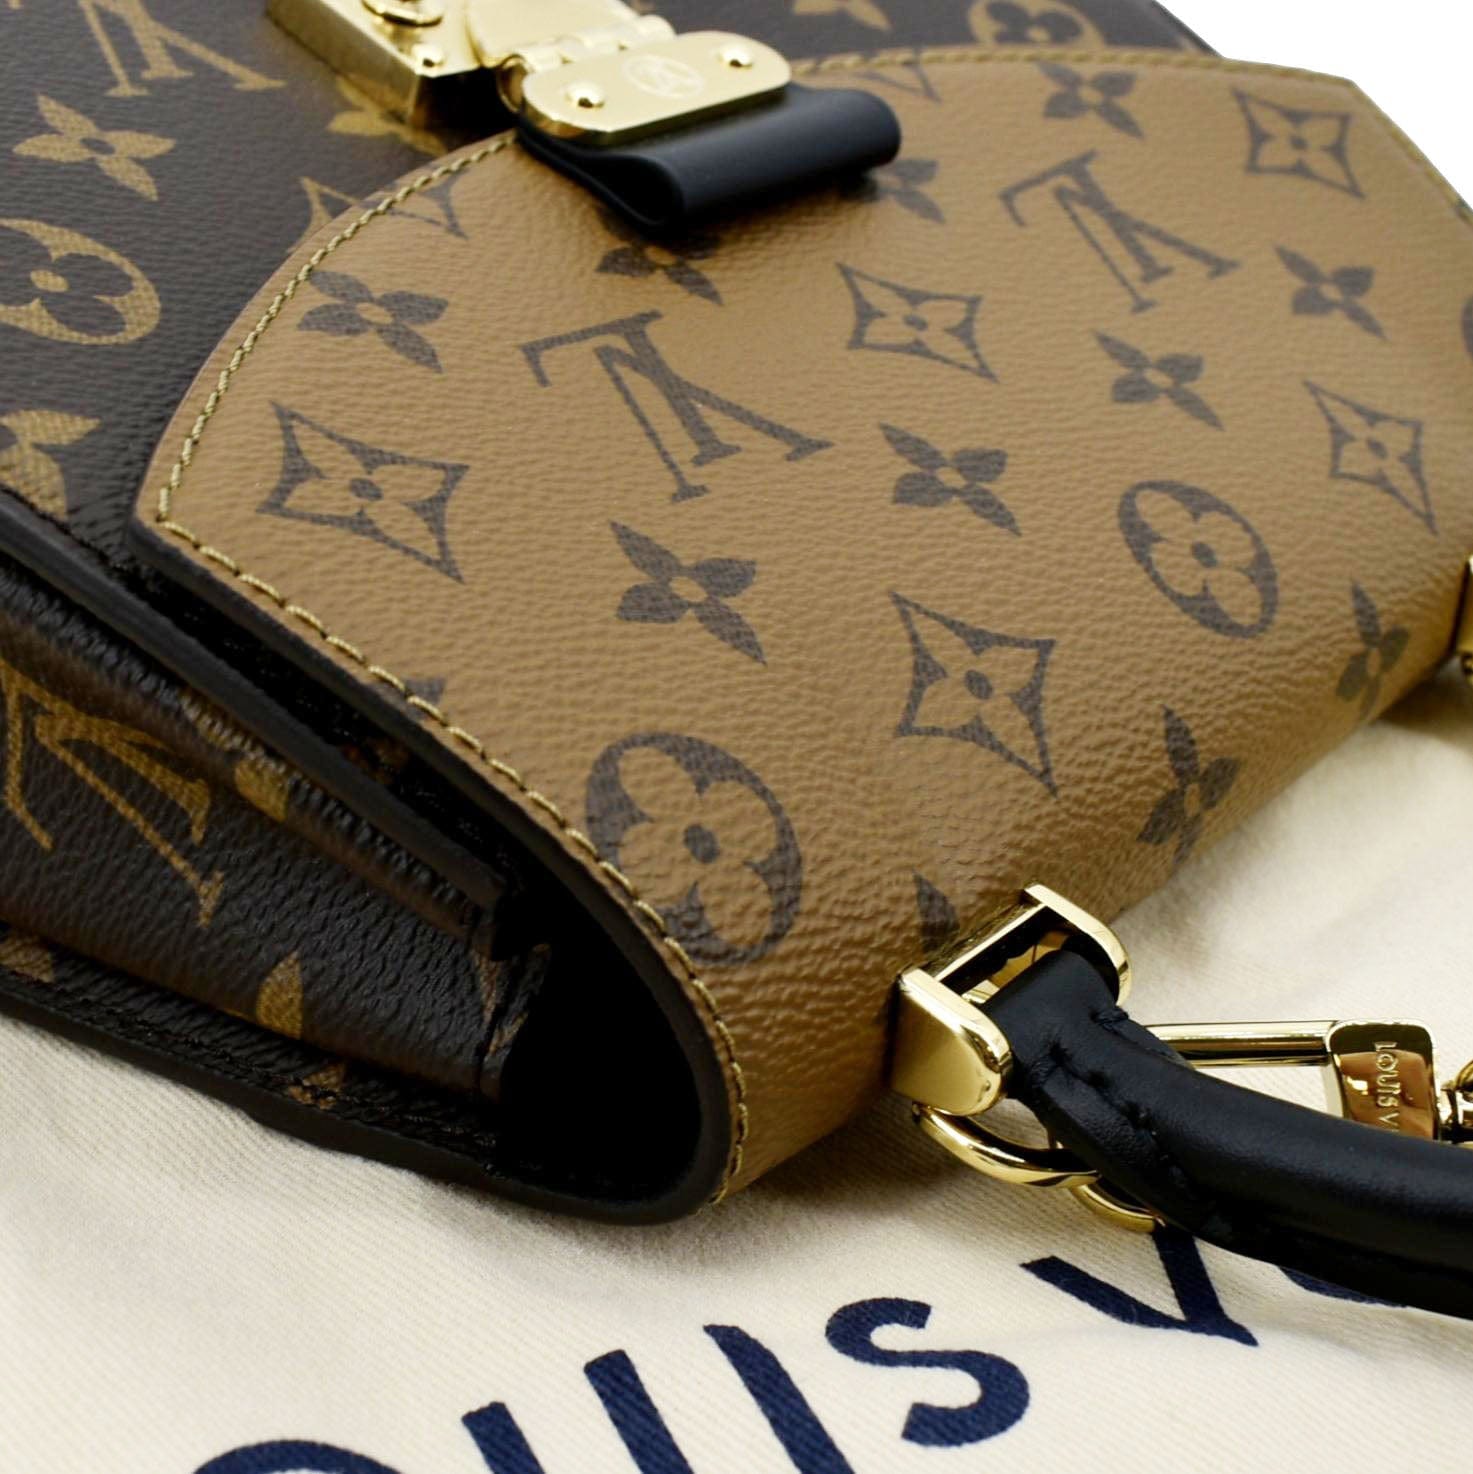 Louis Vuitton Chantilly Lock Handbag Reverse Monogram Canvas and Leather